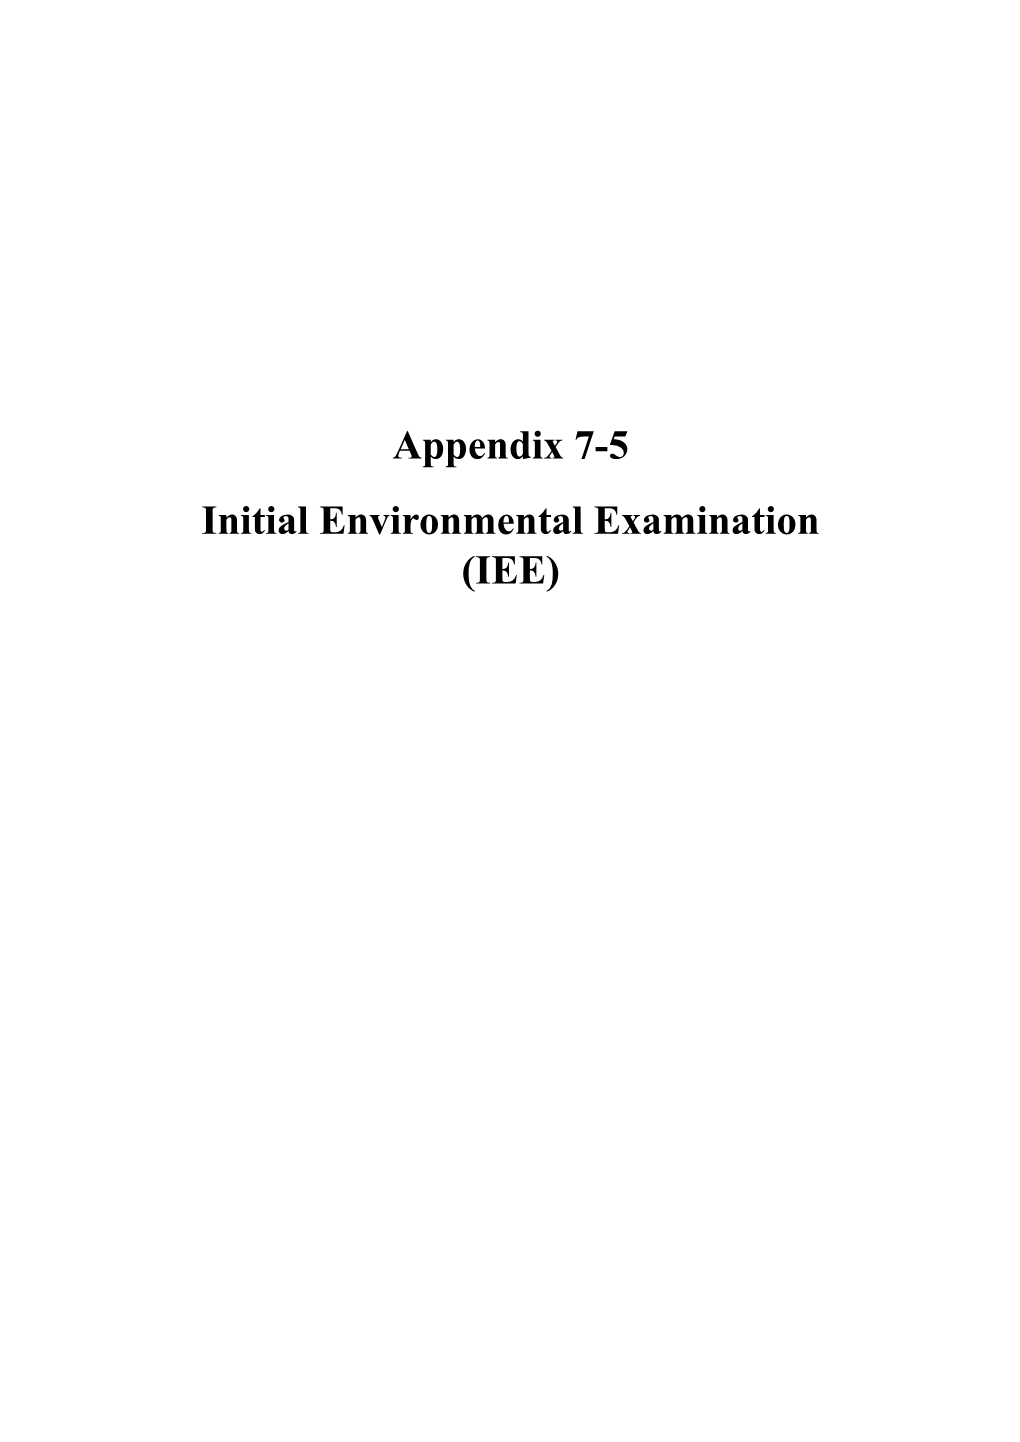 Appendix 7-5 Initial Environmental Examination (IEE)